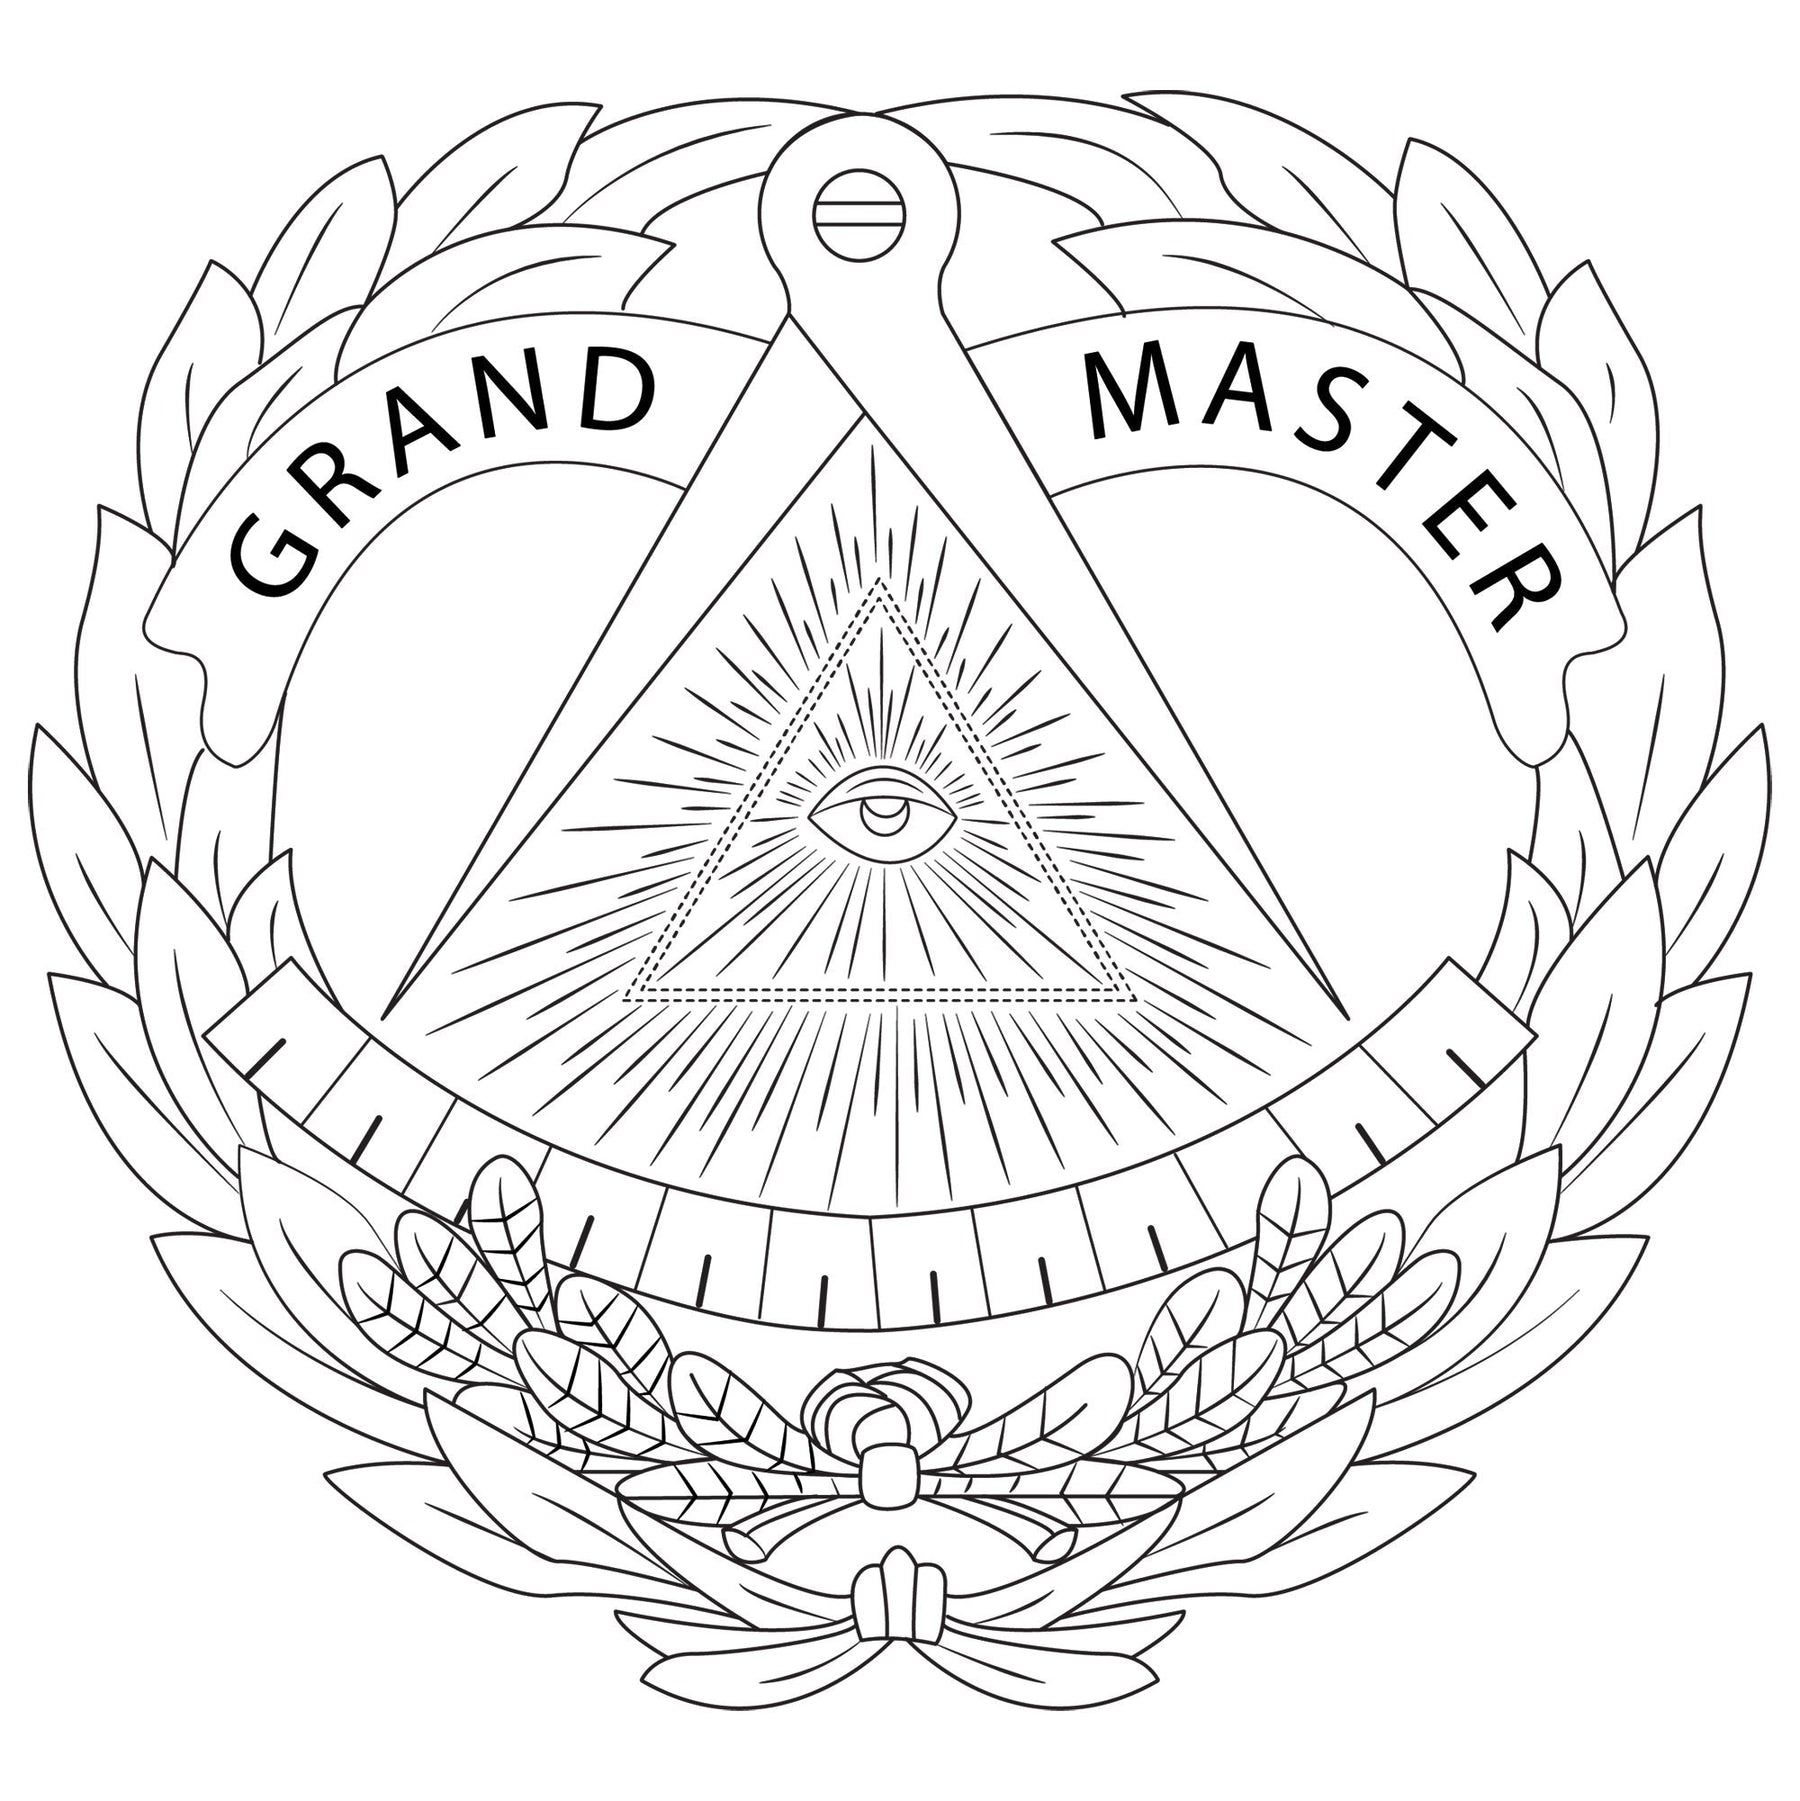 Grand Master Blue Lodge Travel Bag - Genuine Brown Leather - Bricks Masons